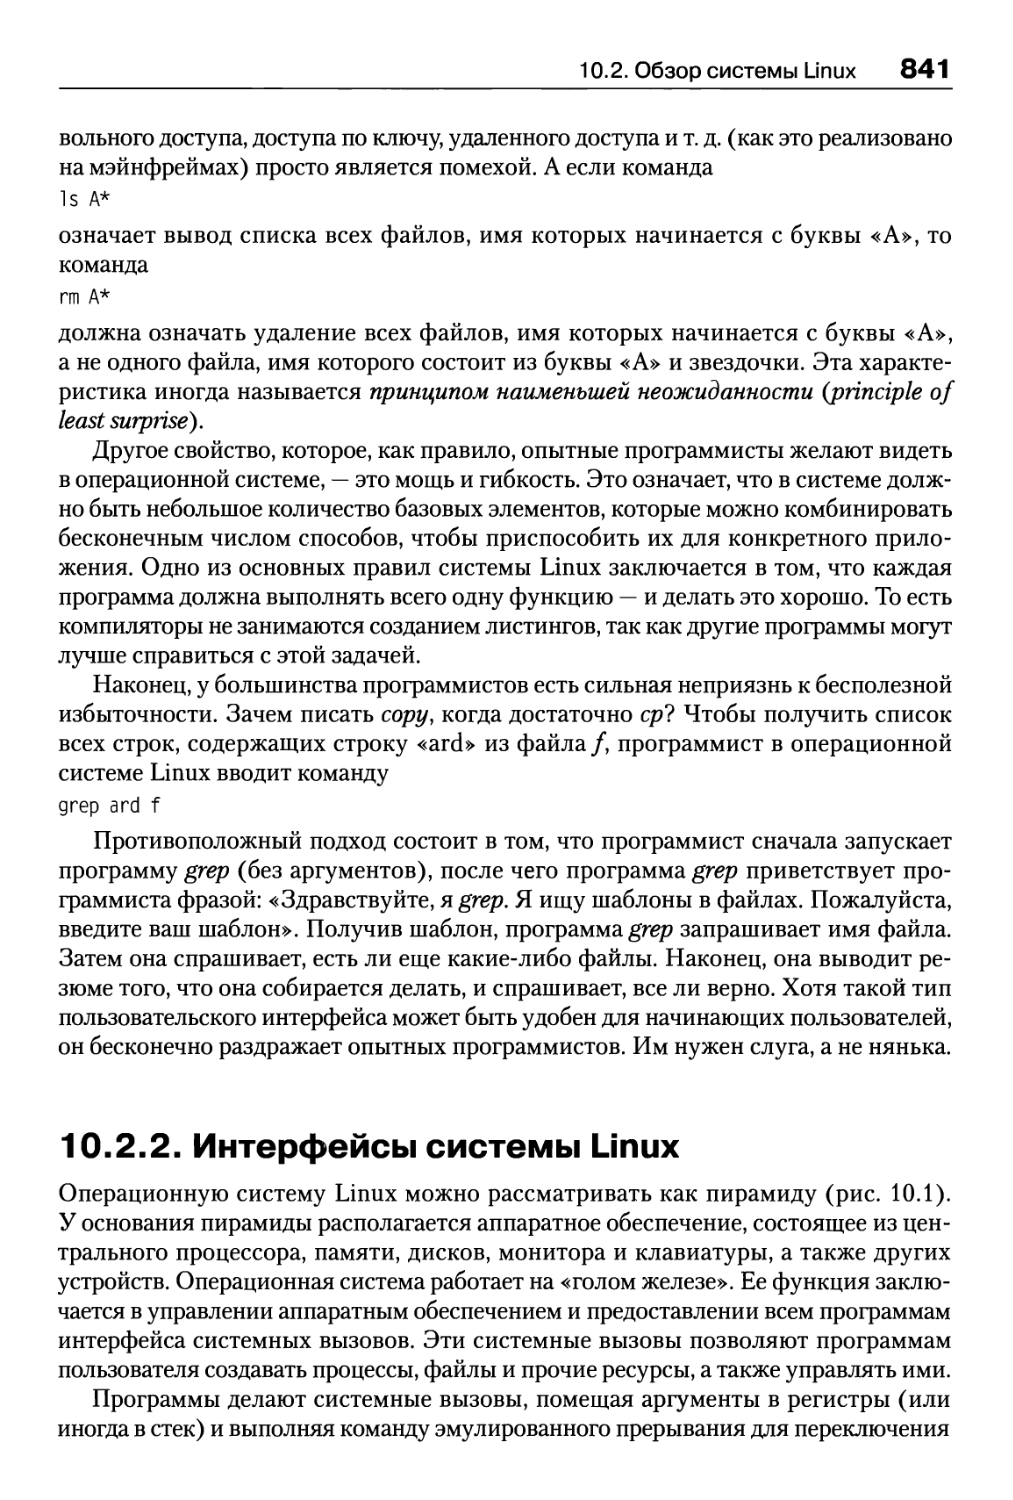 10.2.2. Интерфейсы системы Linux